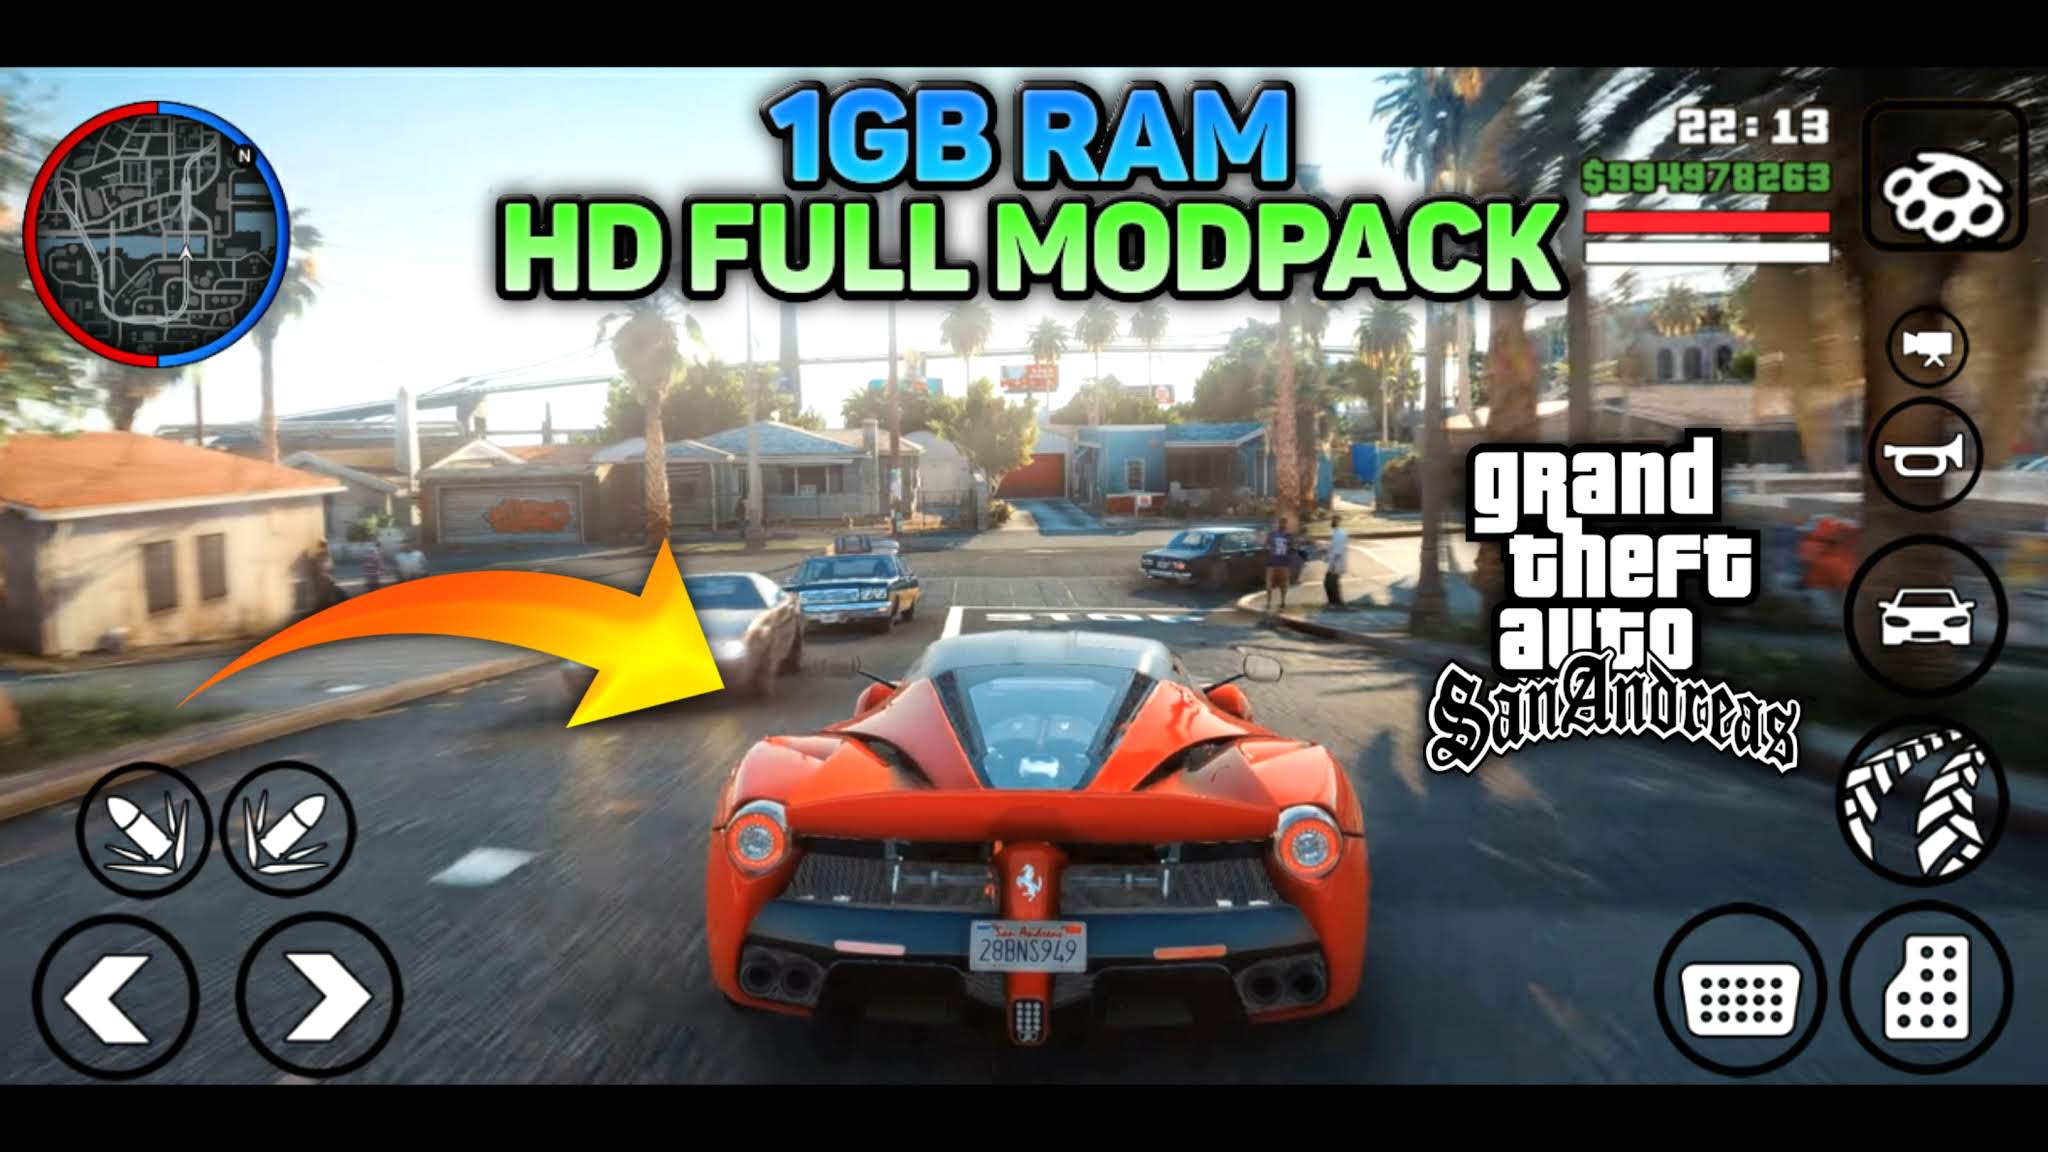 GTA SA LITE!! HD FULL MODPACK APK+DATA FOR 1GB RAM | FULL MODPACK 2020 ANDROID - Gaming World ...